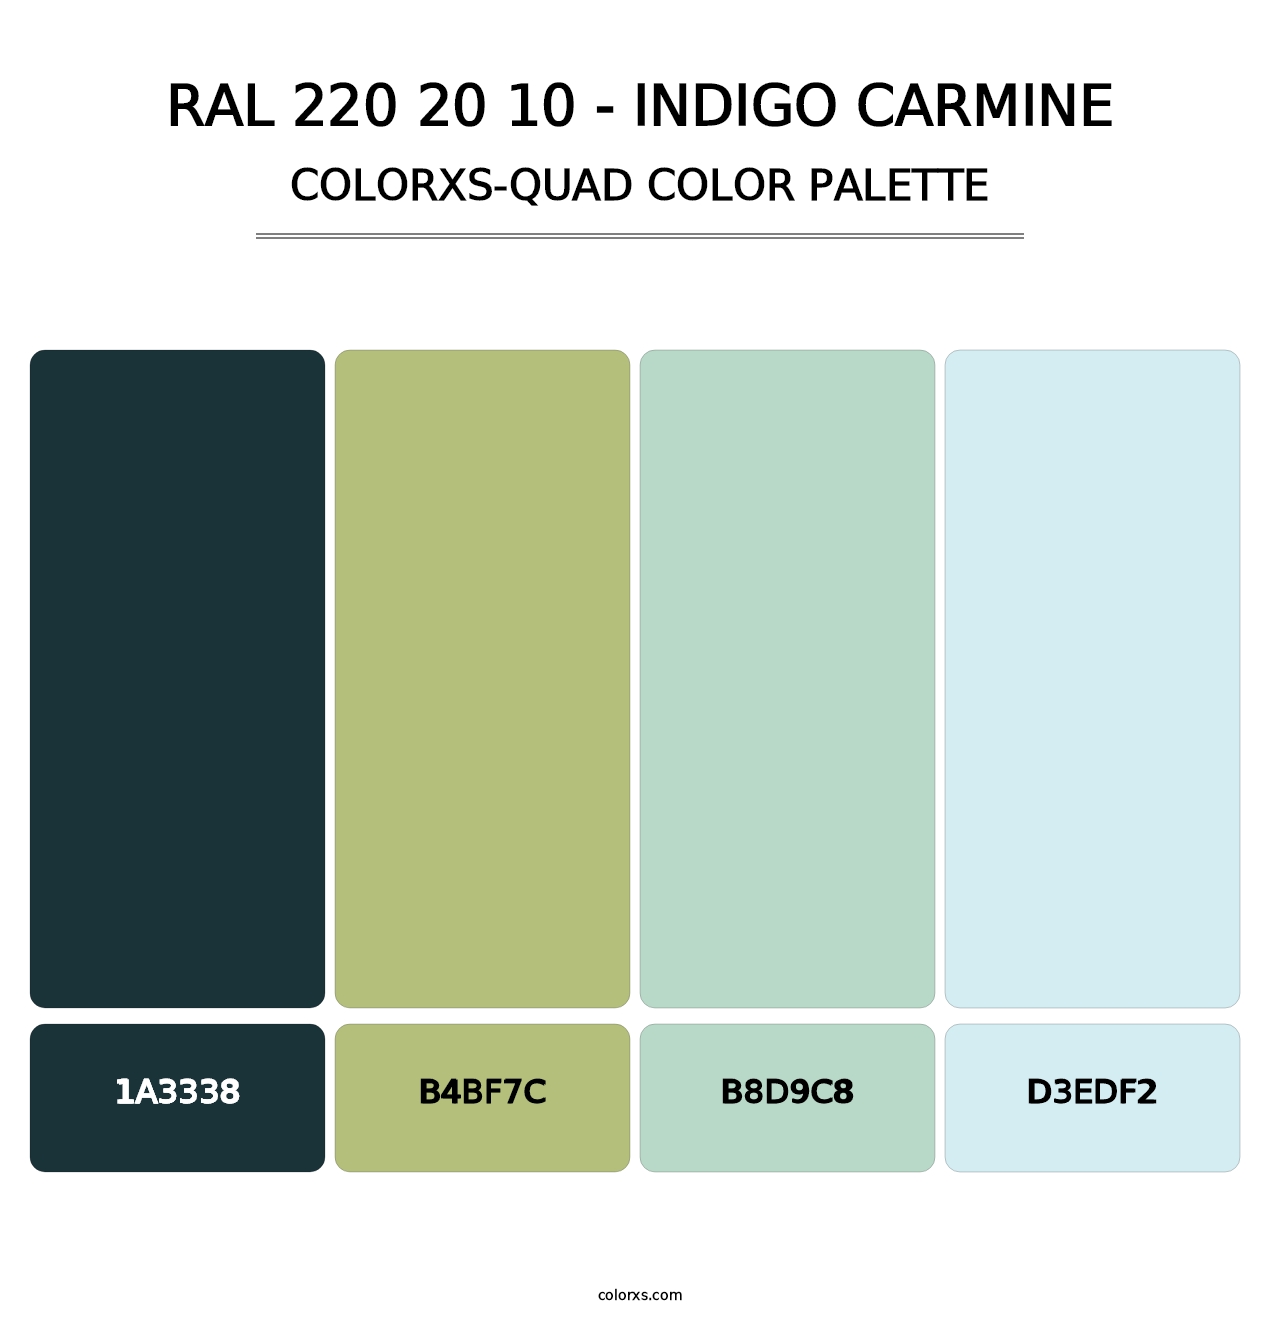 RAL 220 20 10 - Indigo Carmine - Colorxs Quad Palette